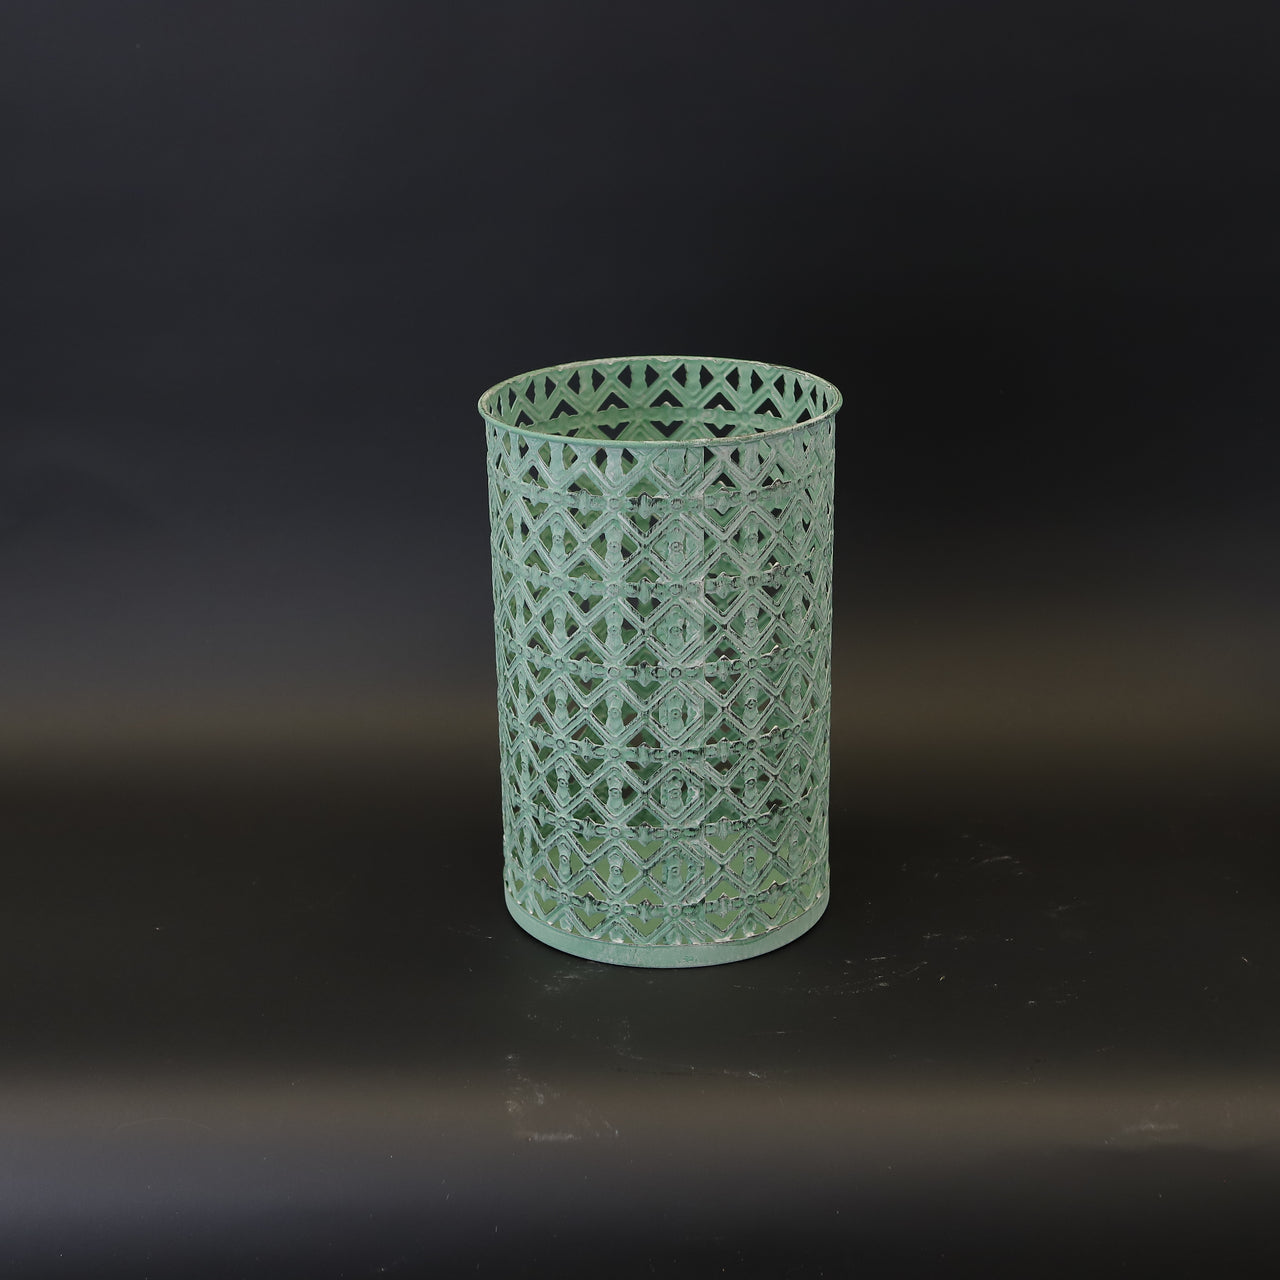 HCHD9256 - L Green Cylinder Vase